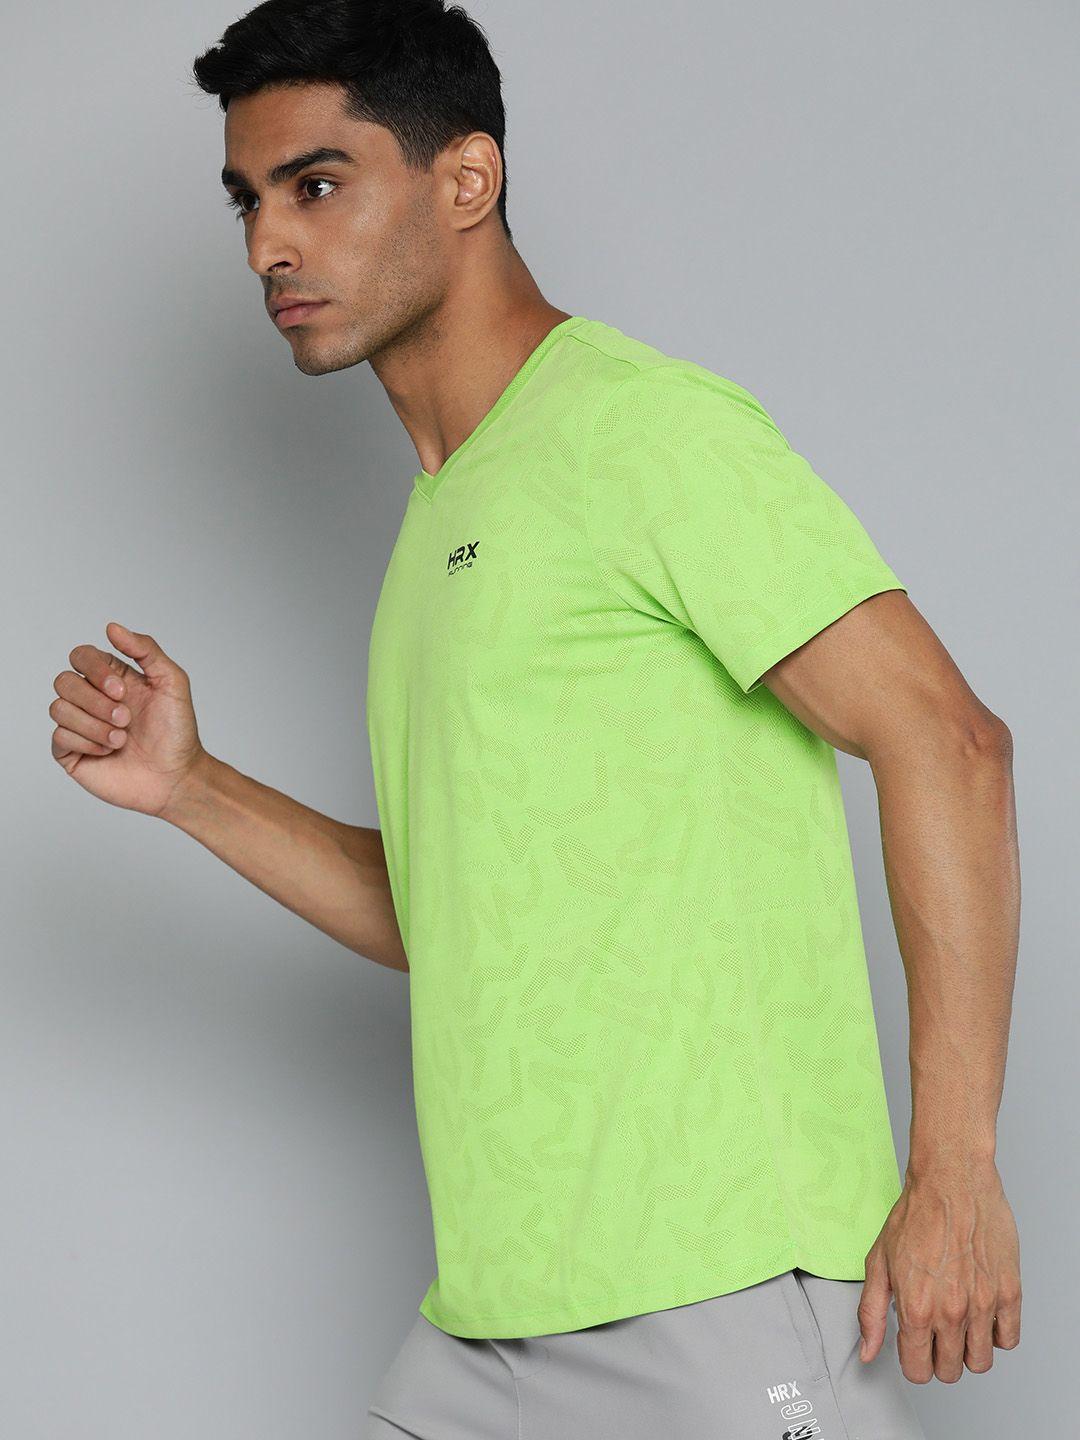 hrx-by-hrithik-roshan-men-brand-logo-printed-rapid-dry-sports-t-shirt